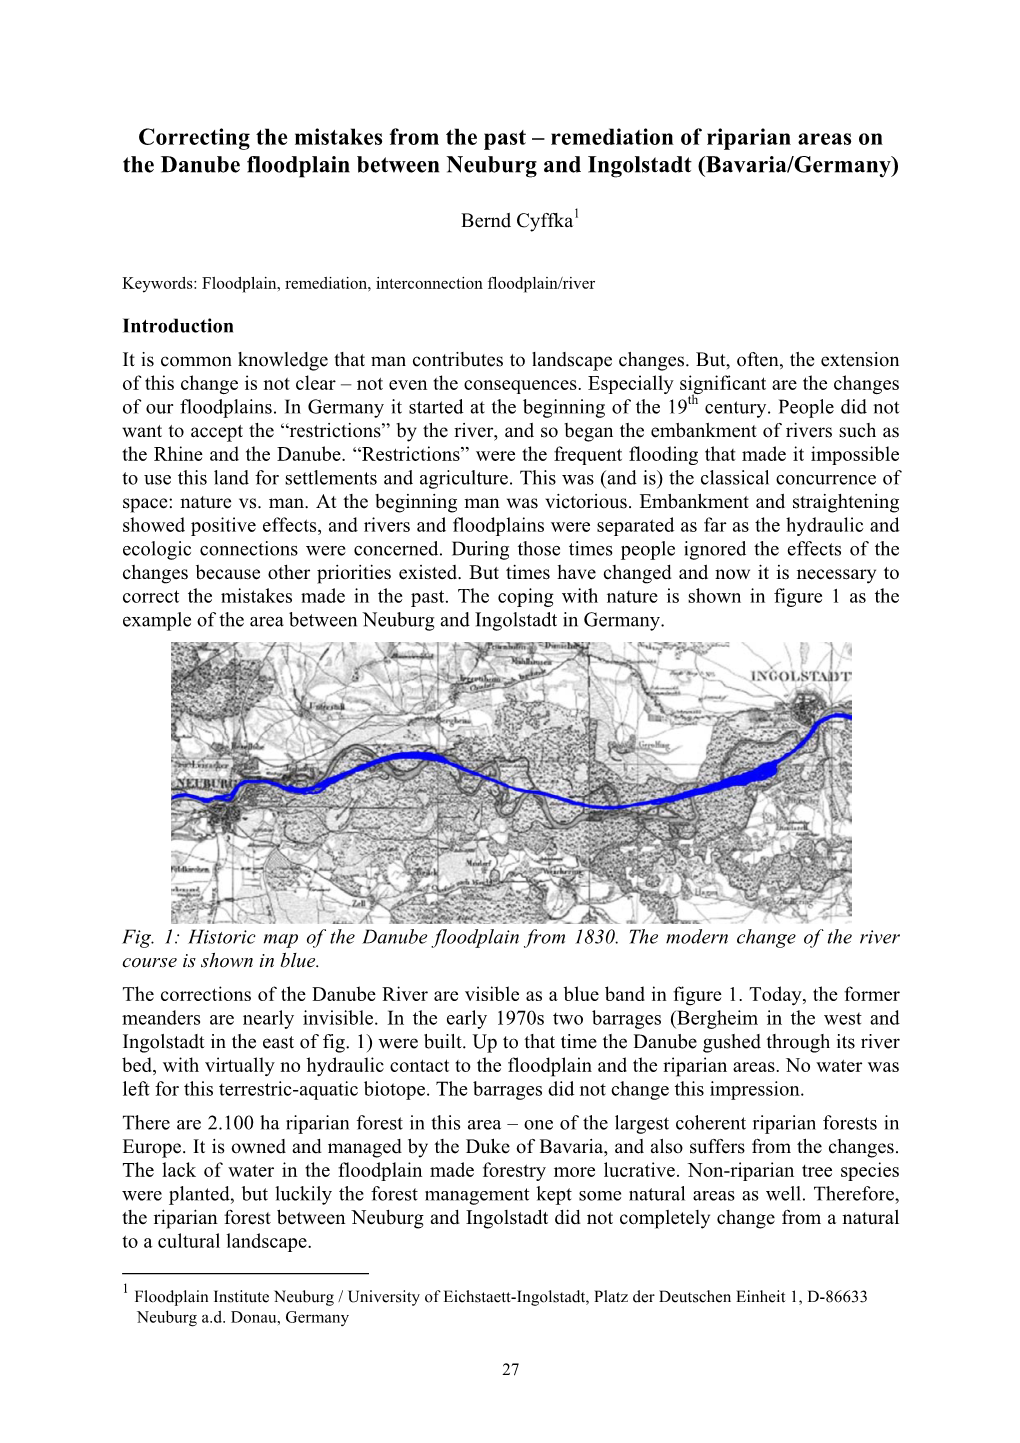 Remediation of Riparian Areas on the Danube Floodplain Between Neuburg and Ingolstadt (Bavaria/Germany)